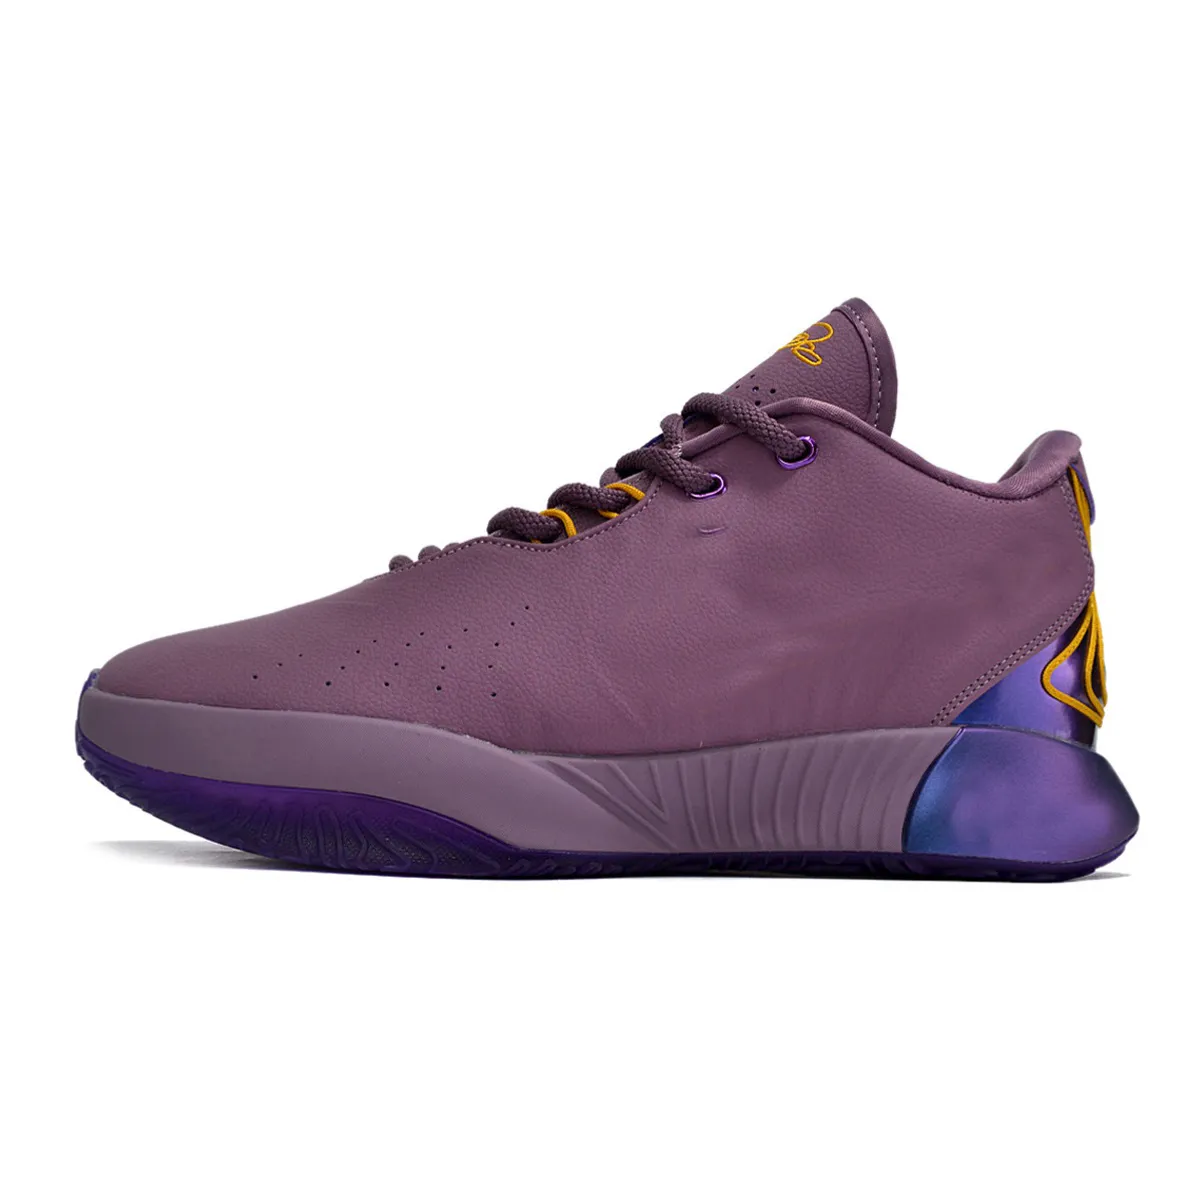 LeBron 21 Basketball Shoes For Men, Violet Dust Theater Multicolor ...